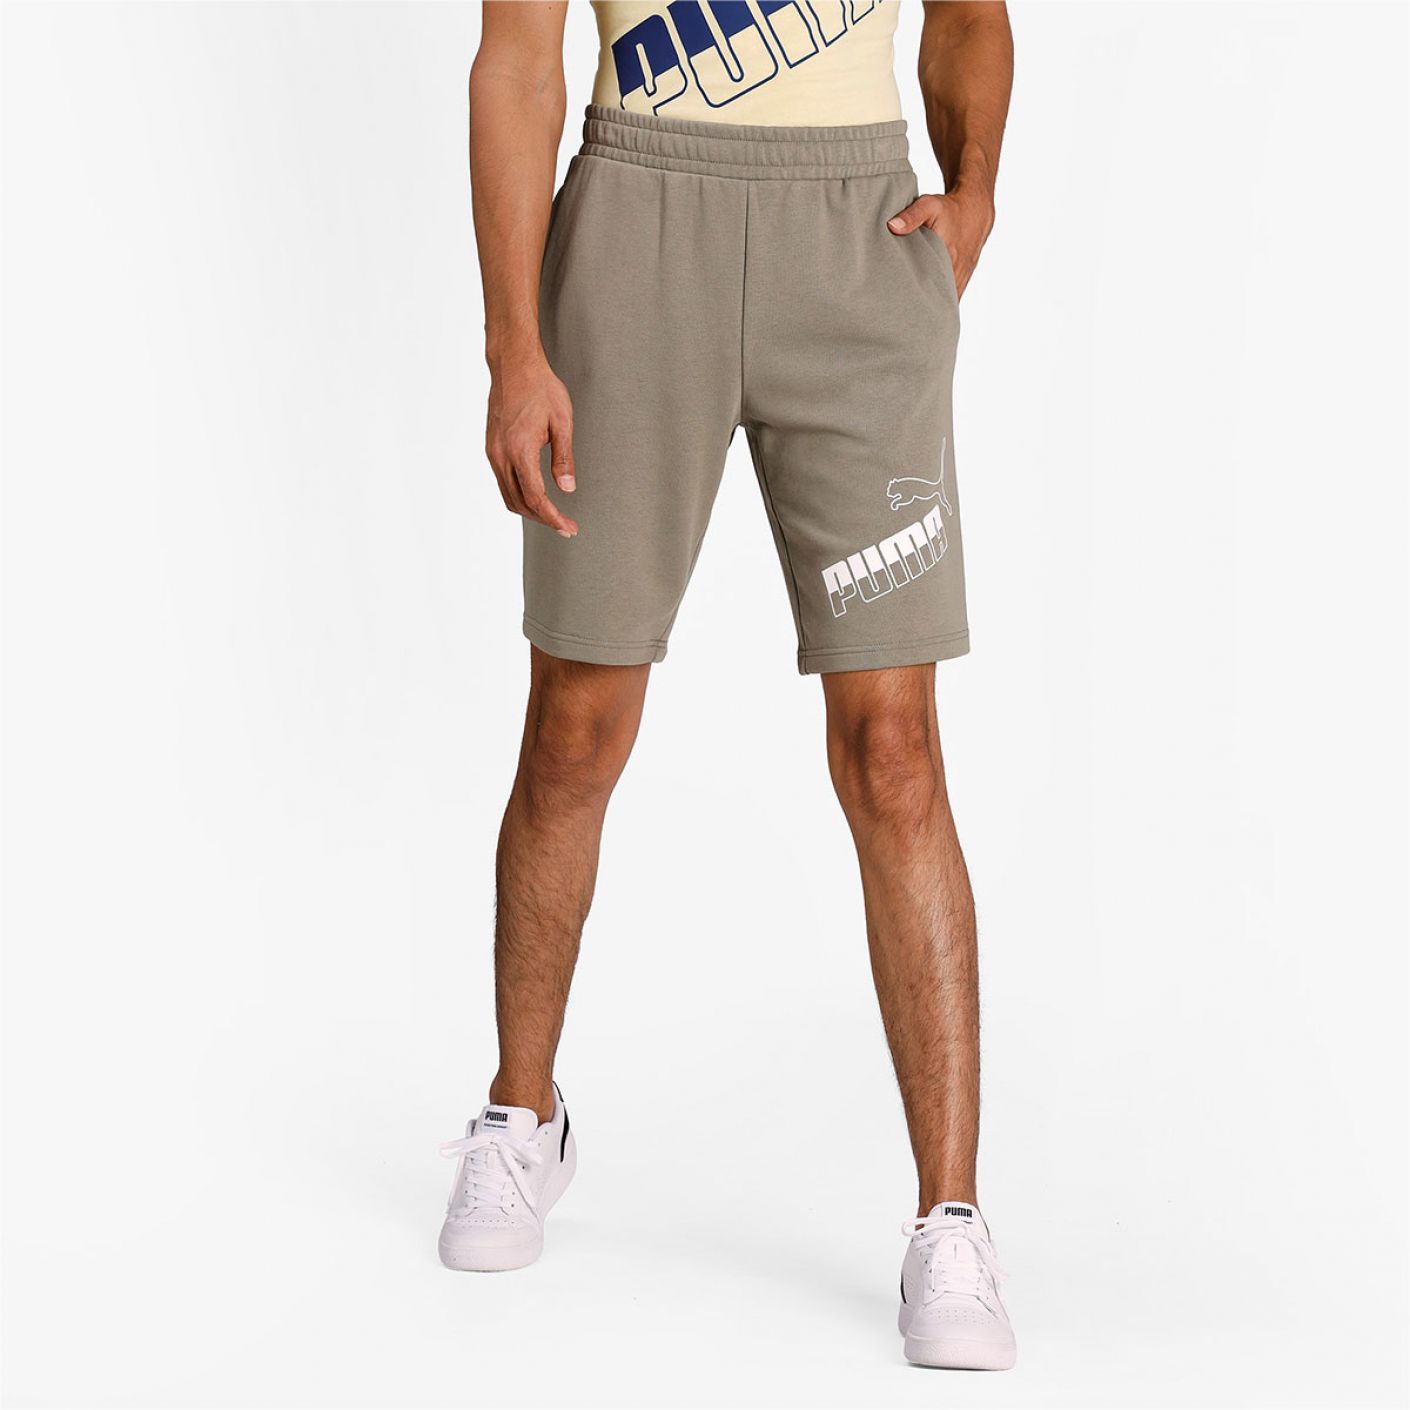 Puma - Big logo shorts 10 